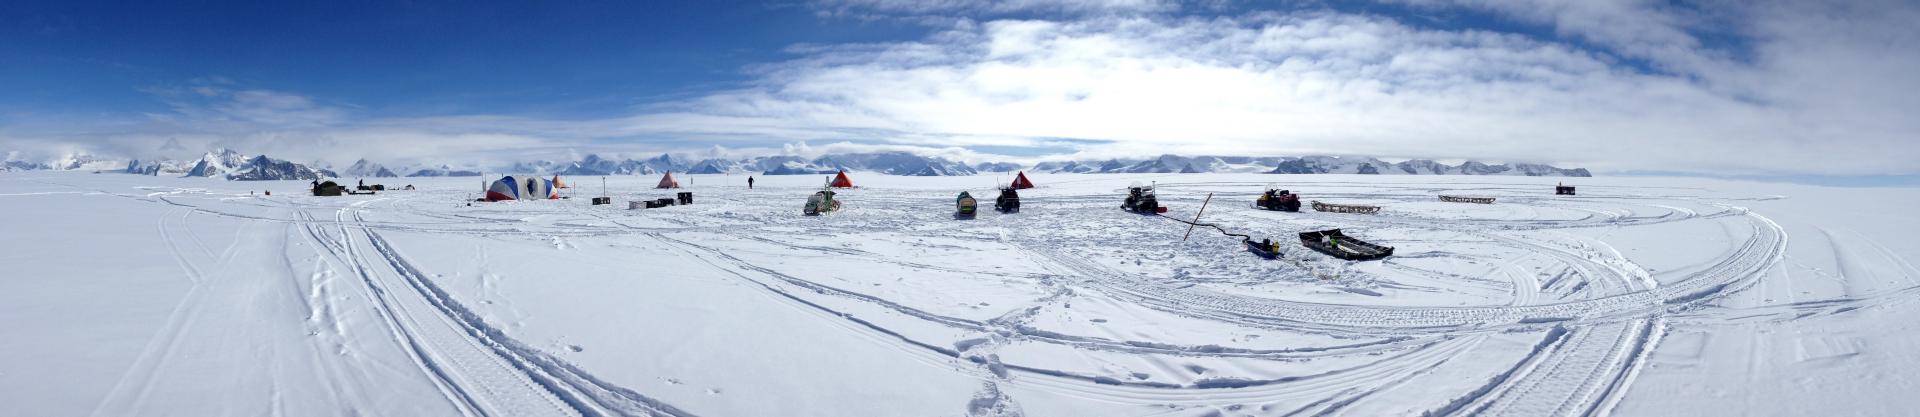 Antarctica Field Course